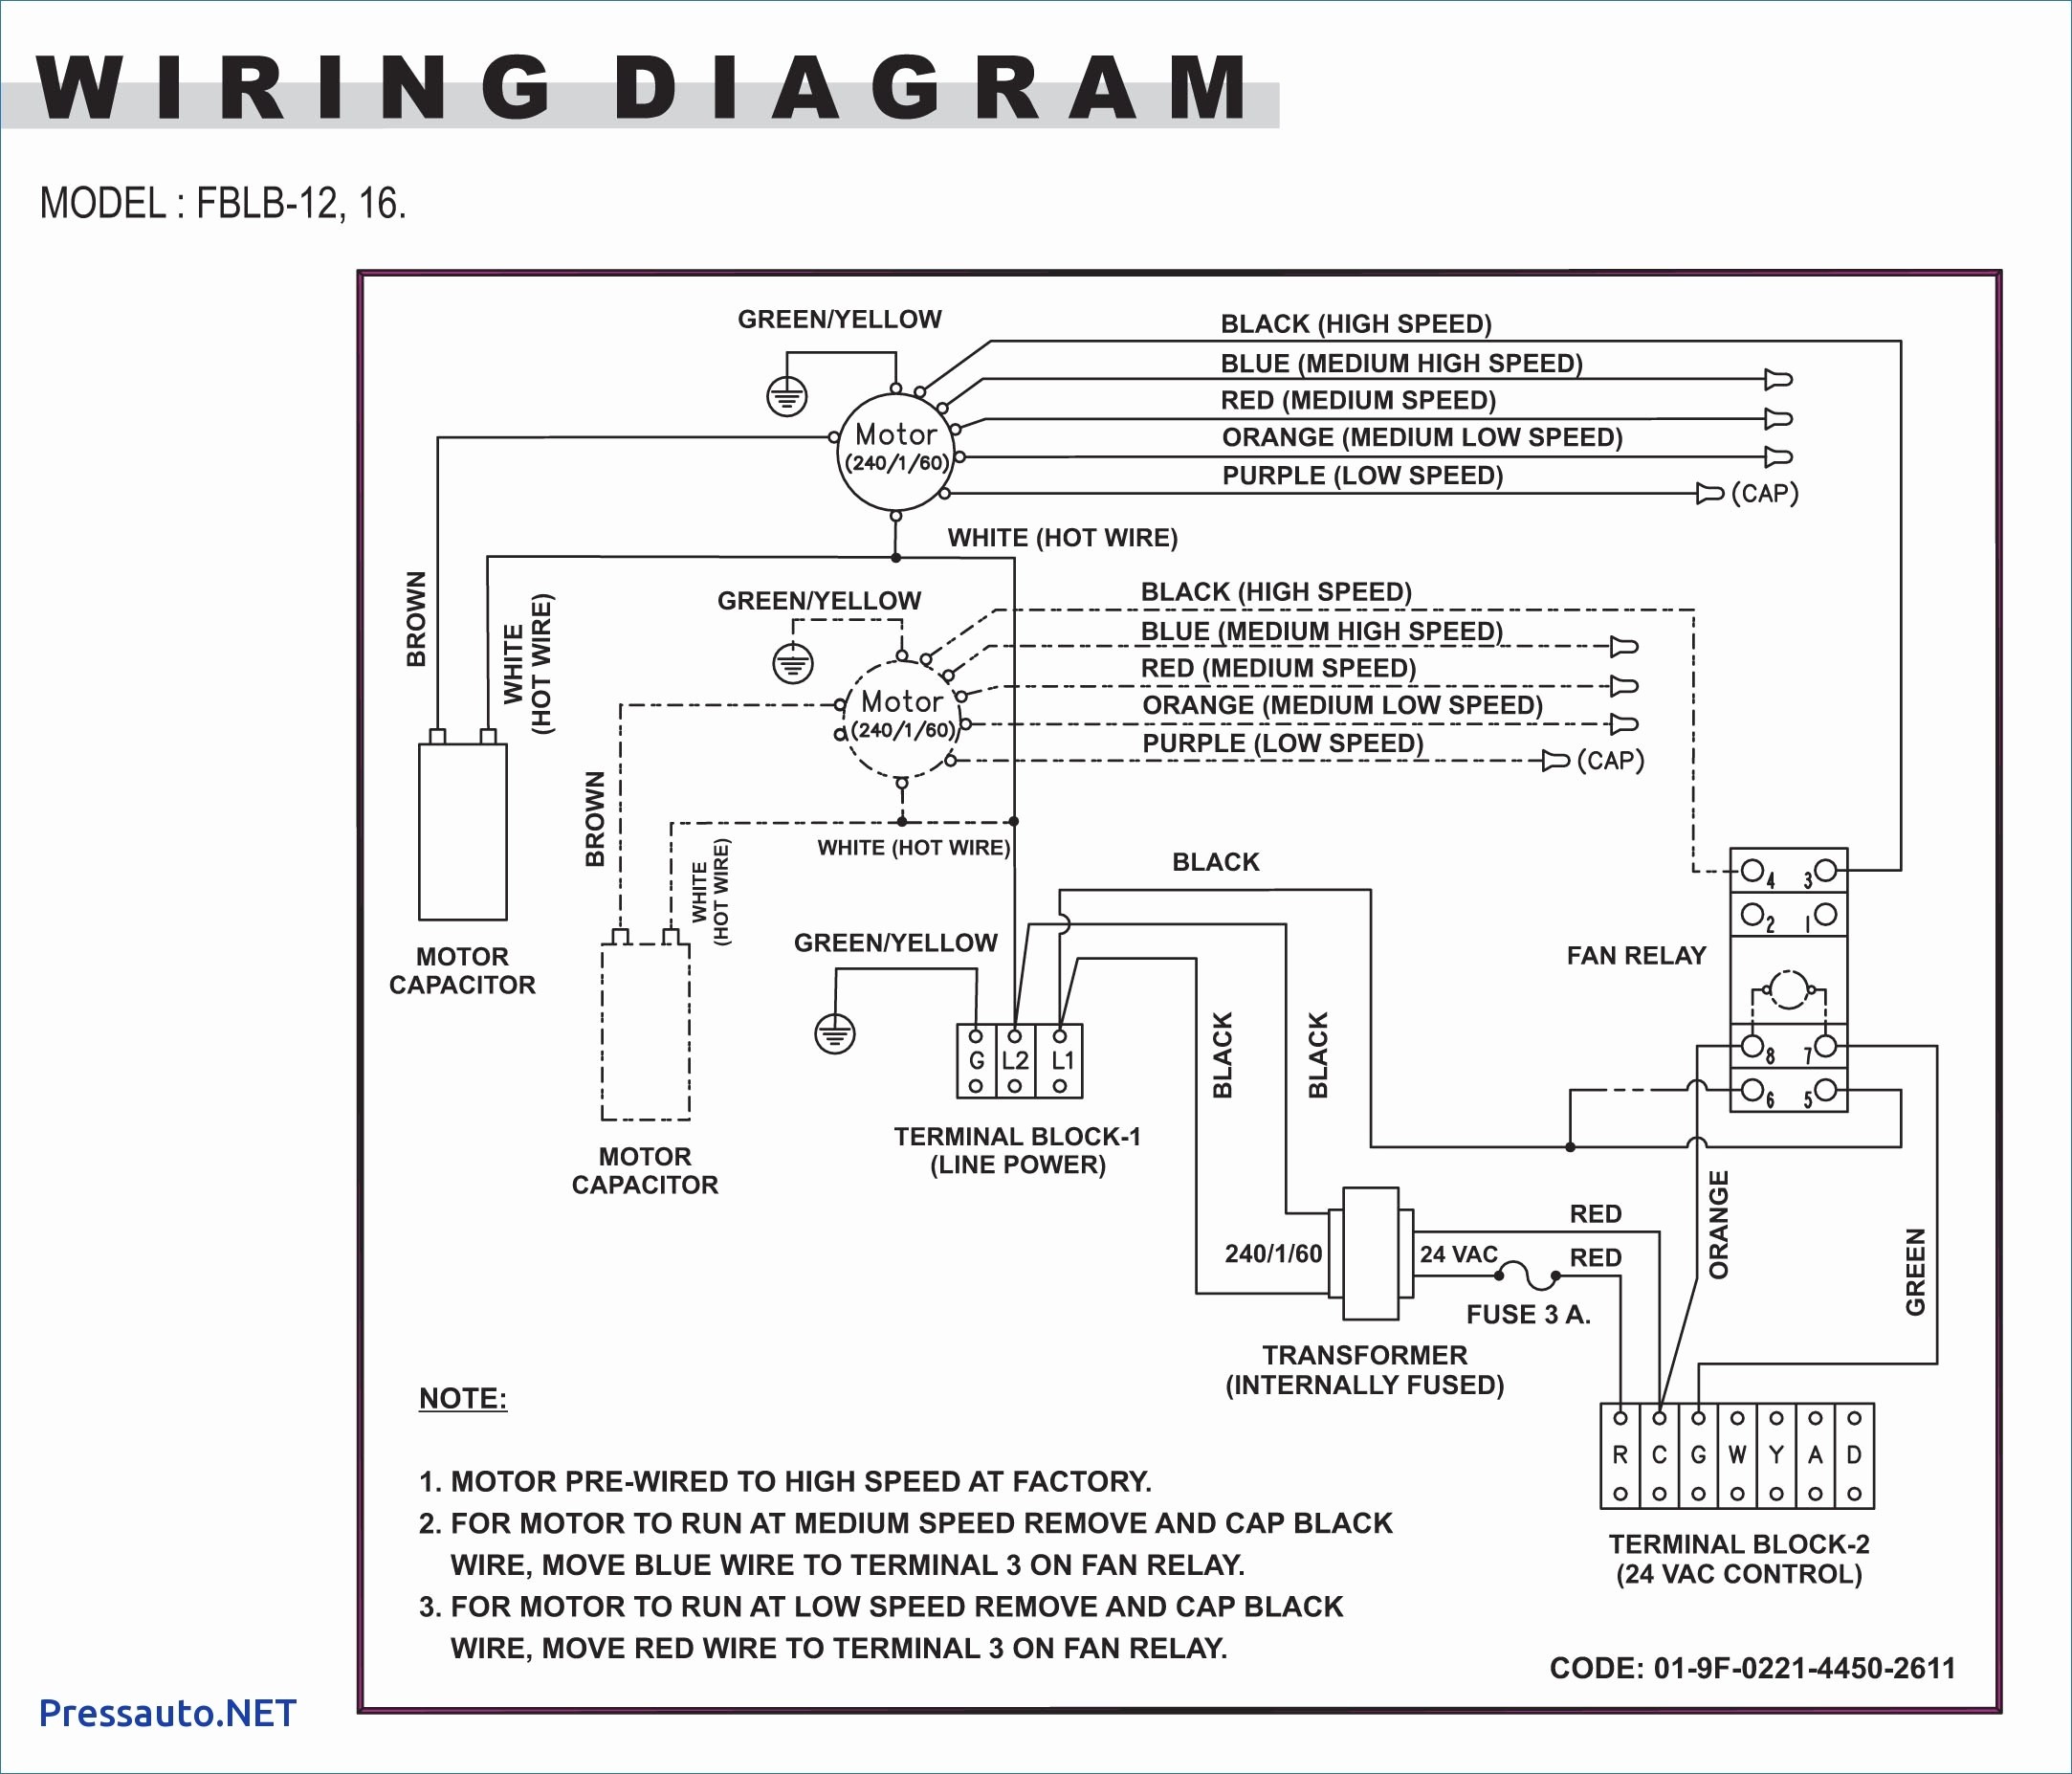 Water Heater Wiring Diagram Best Electric Storage Extraordinary Water Heater 220 Volt Wiring Diagram Electric Heater Wiring